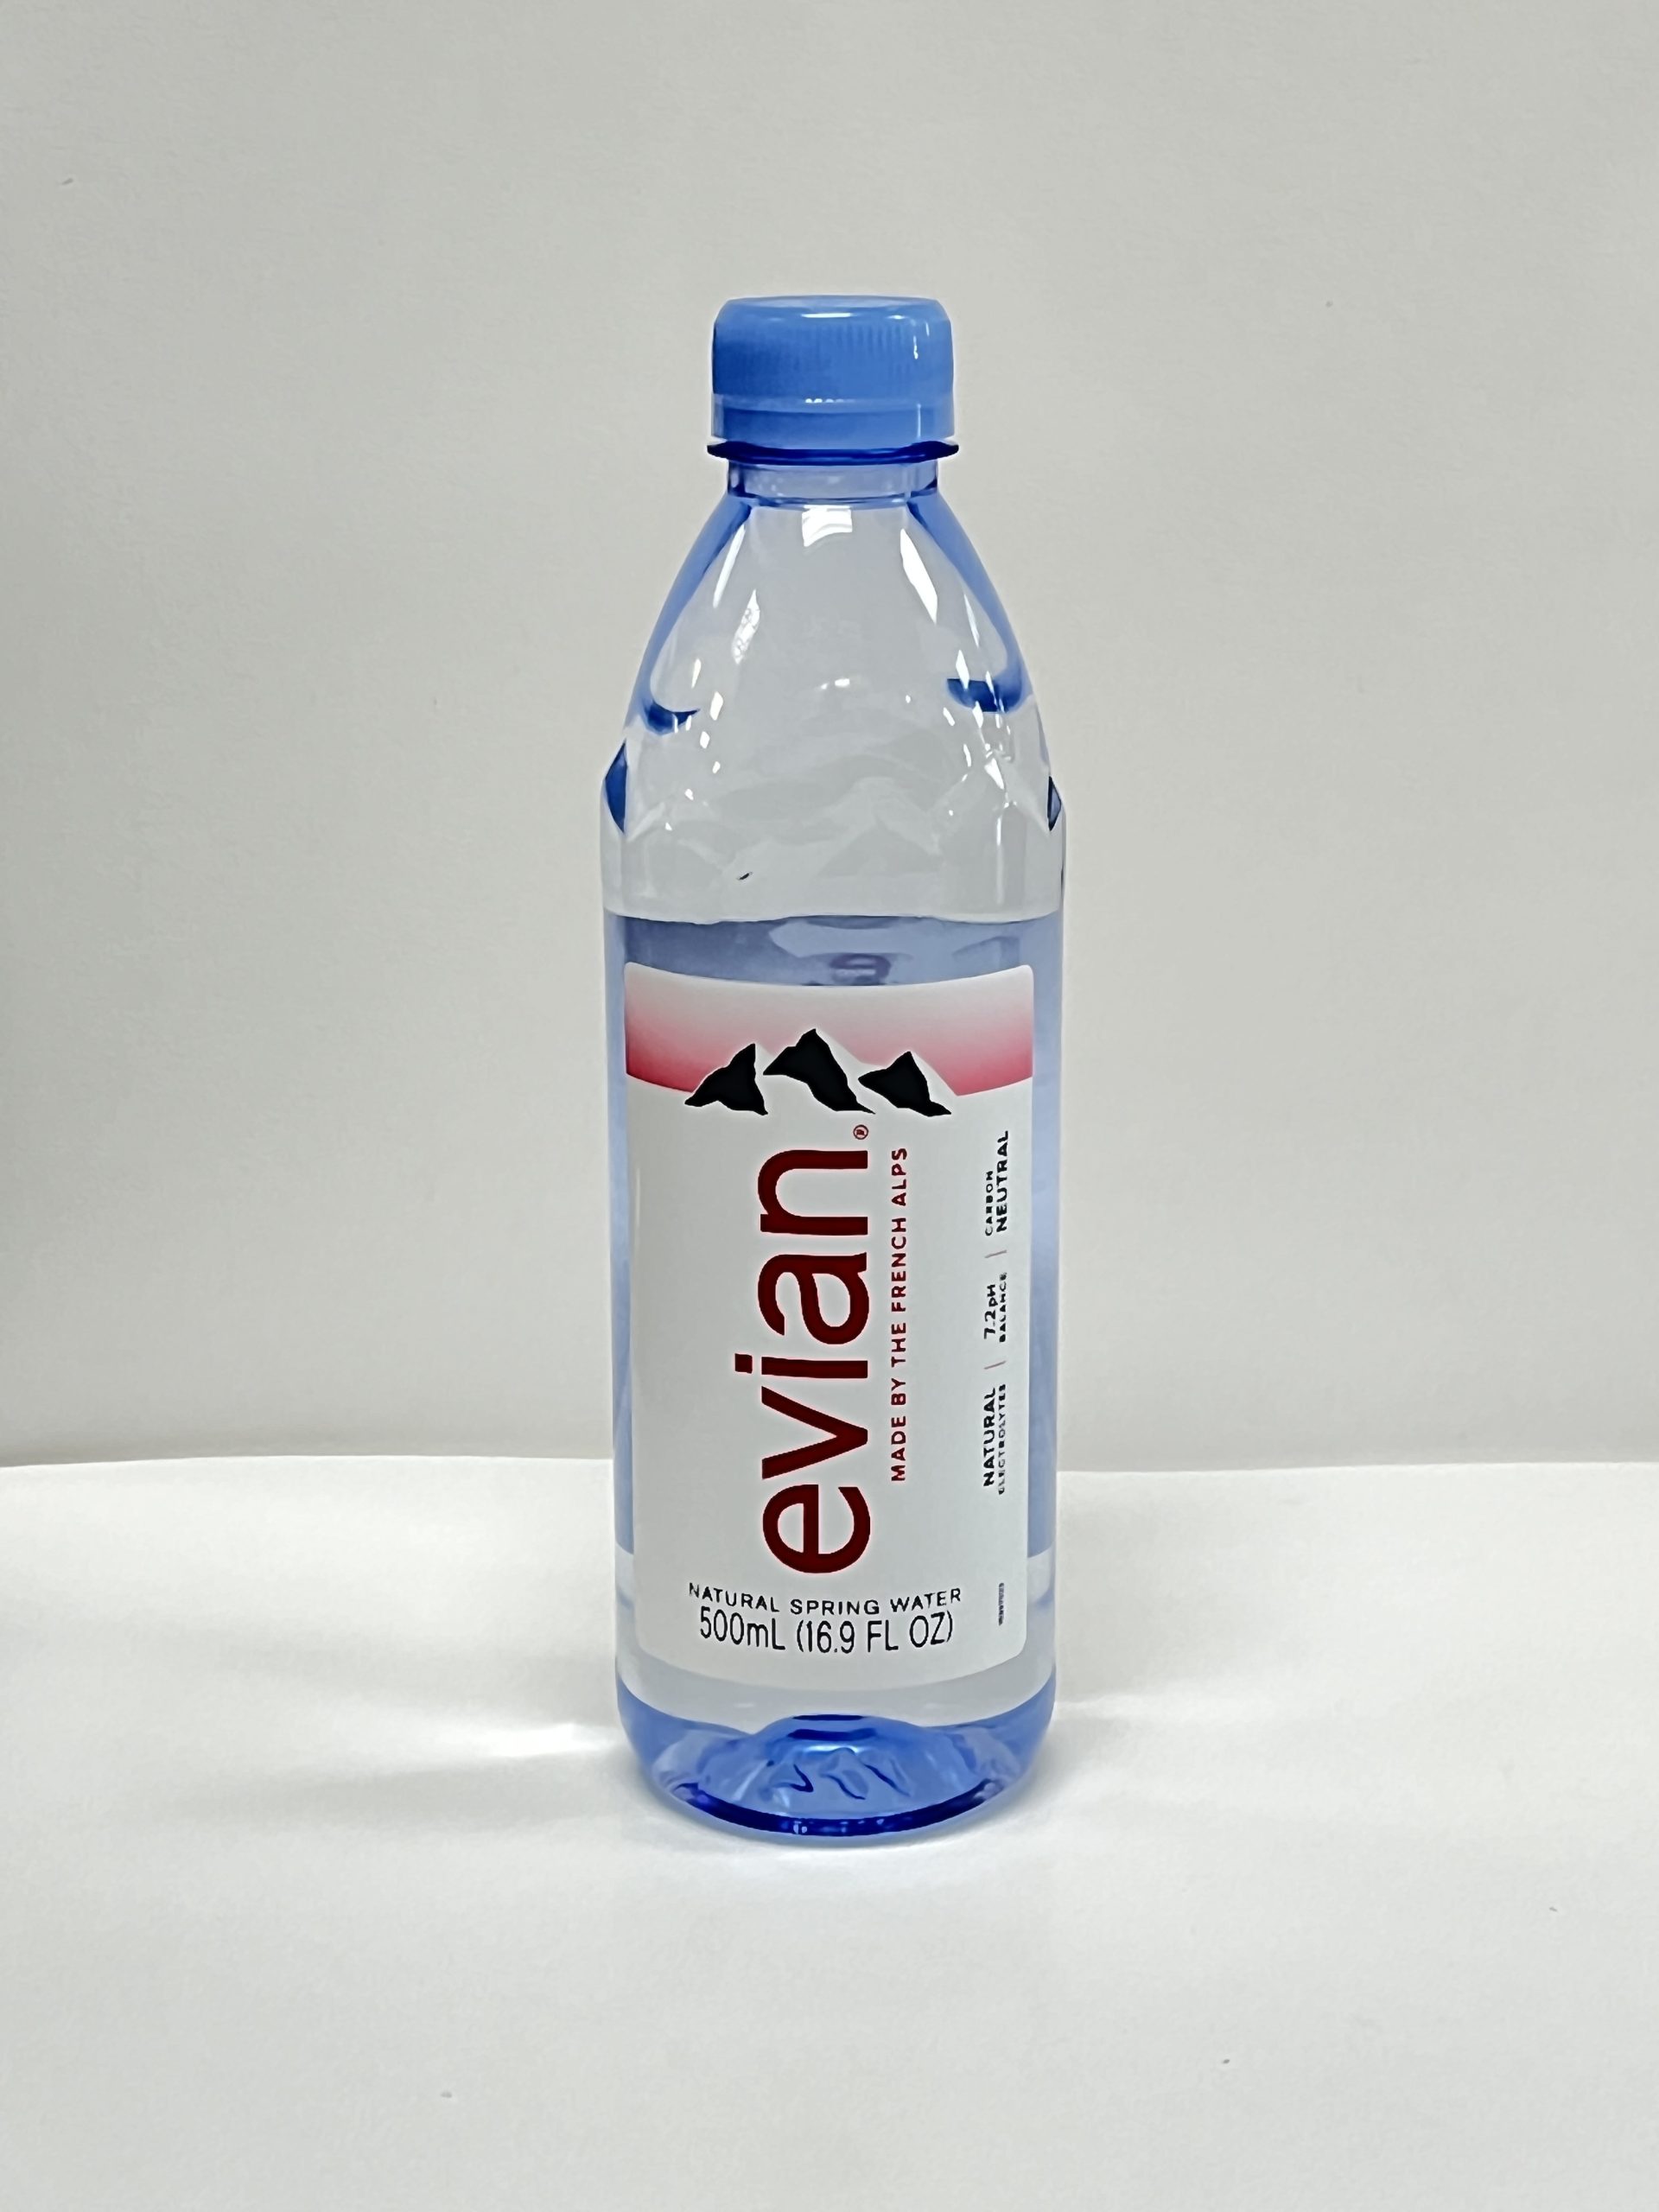 TO GO Water Bottle 500 ml - Neutral Grey